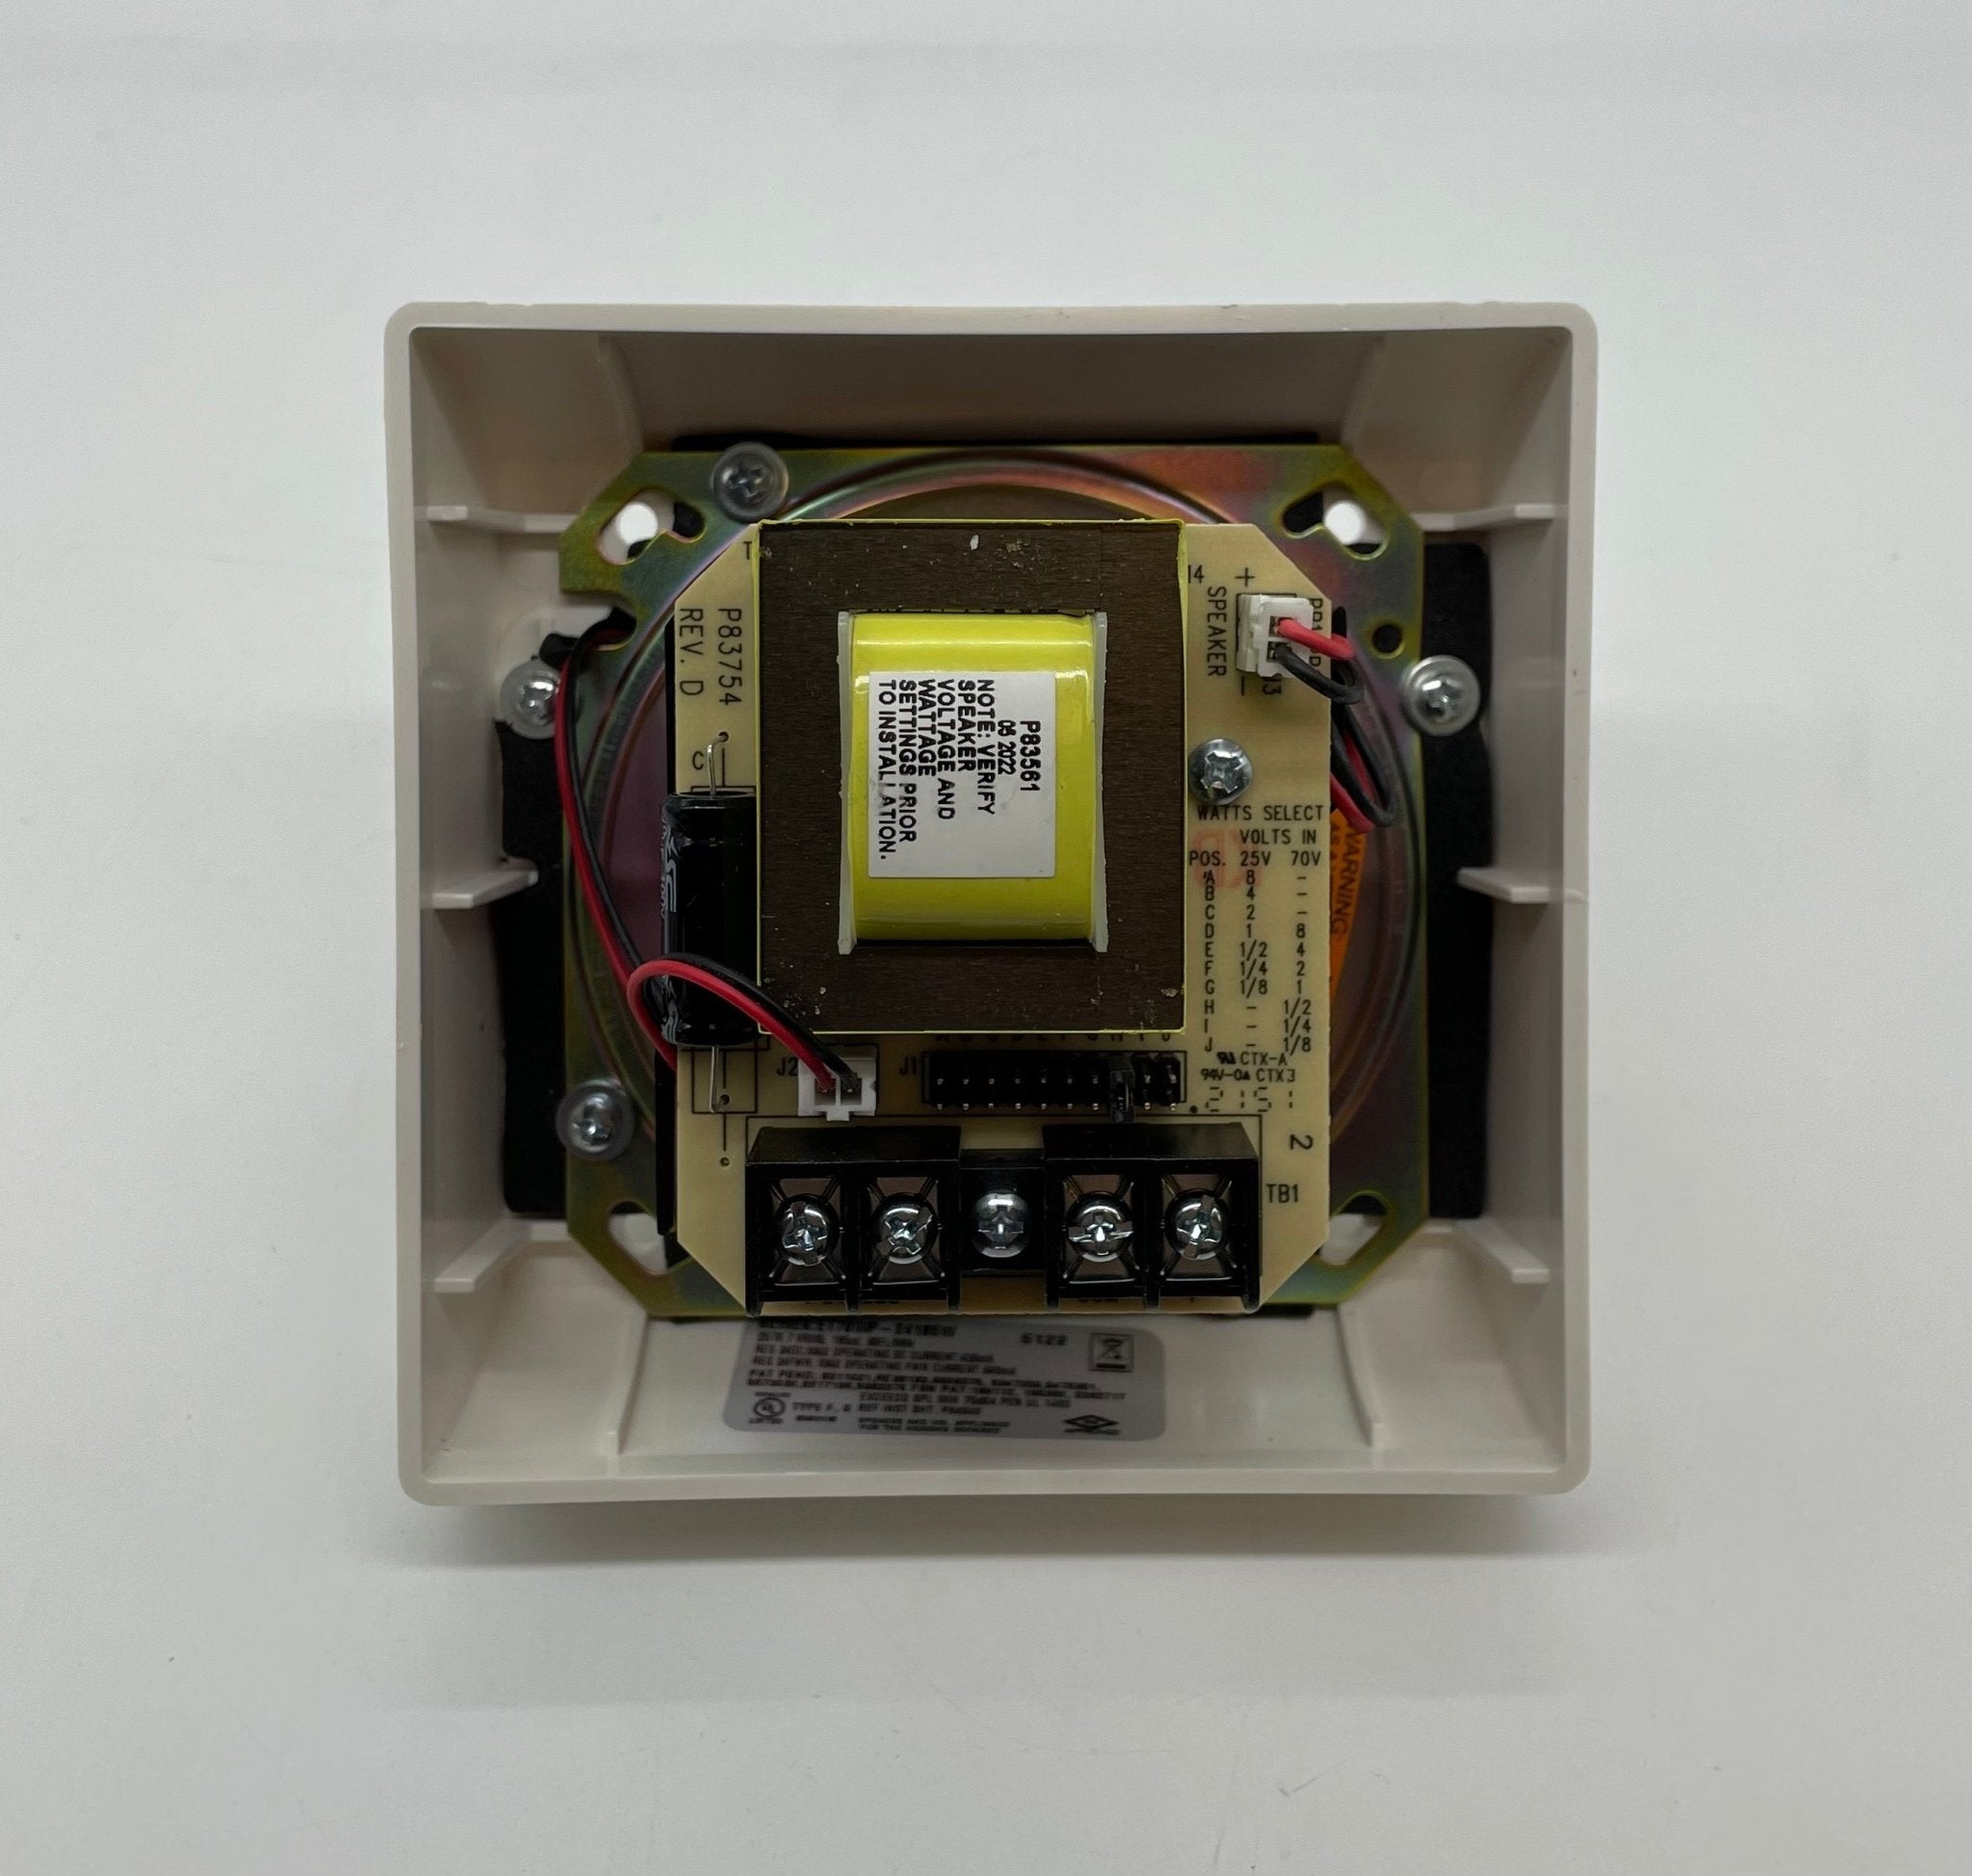 Wheelock ET70WP-24185W-FW - The Fire Alarm Supplier